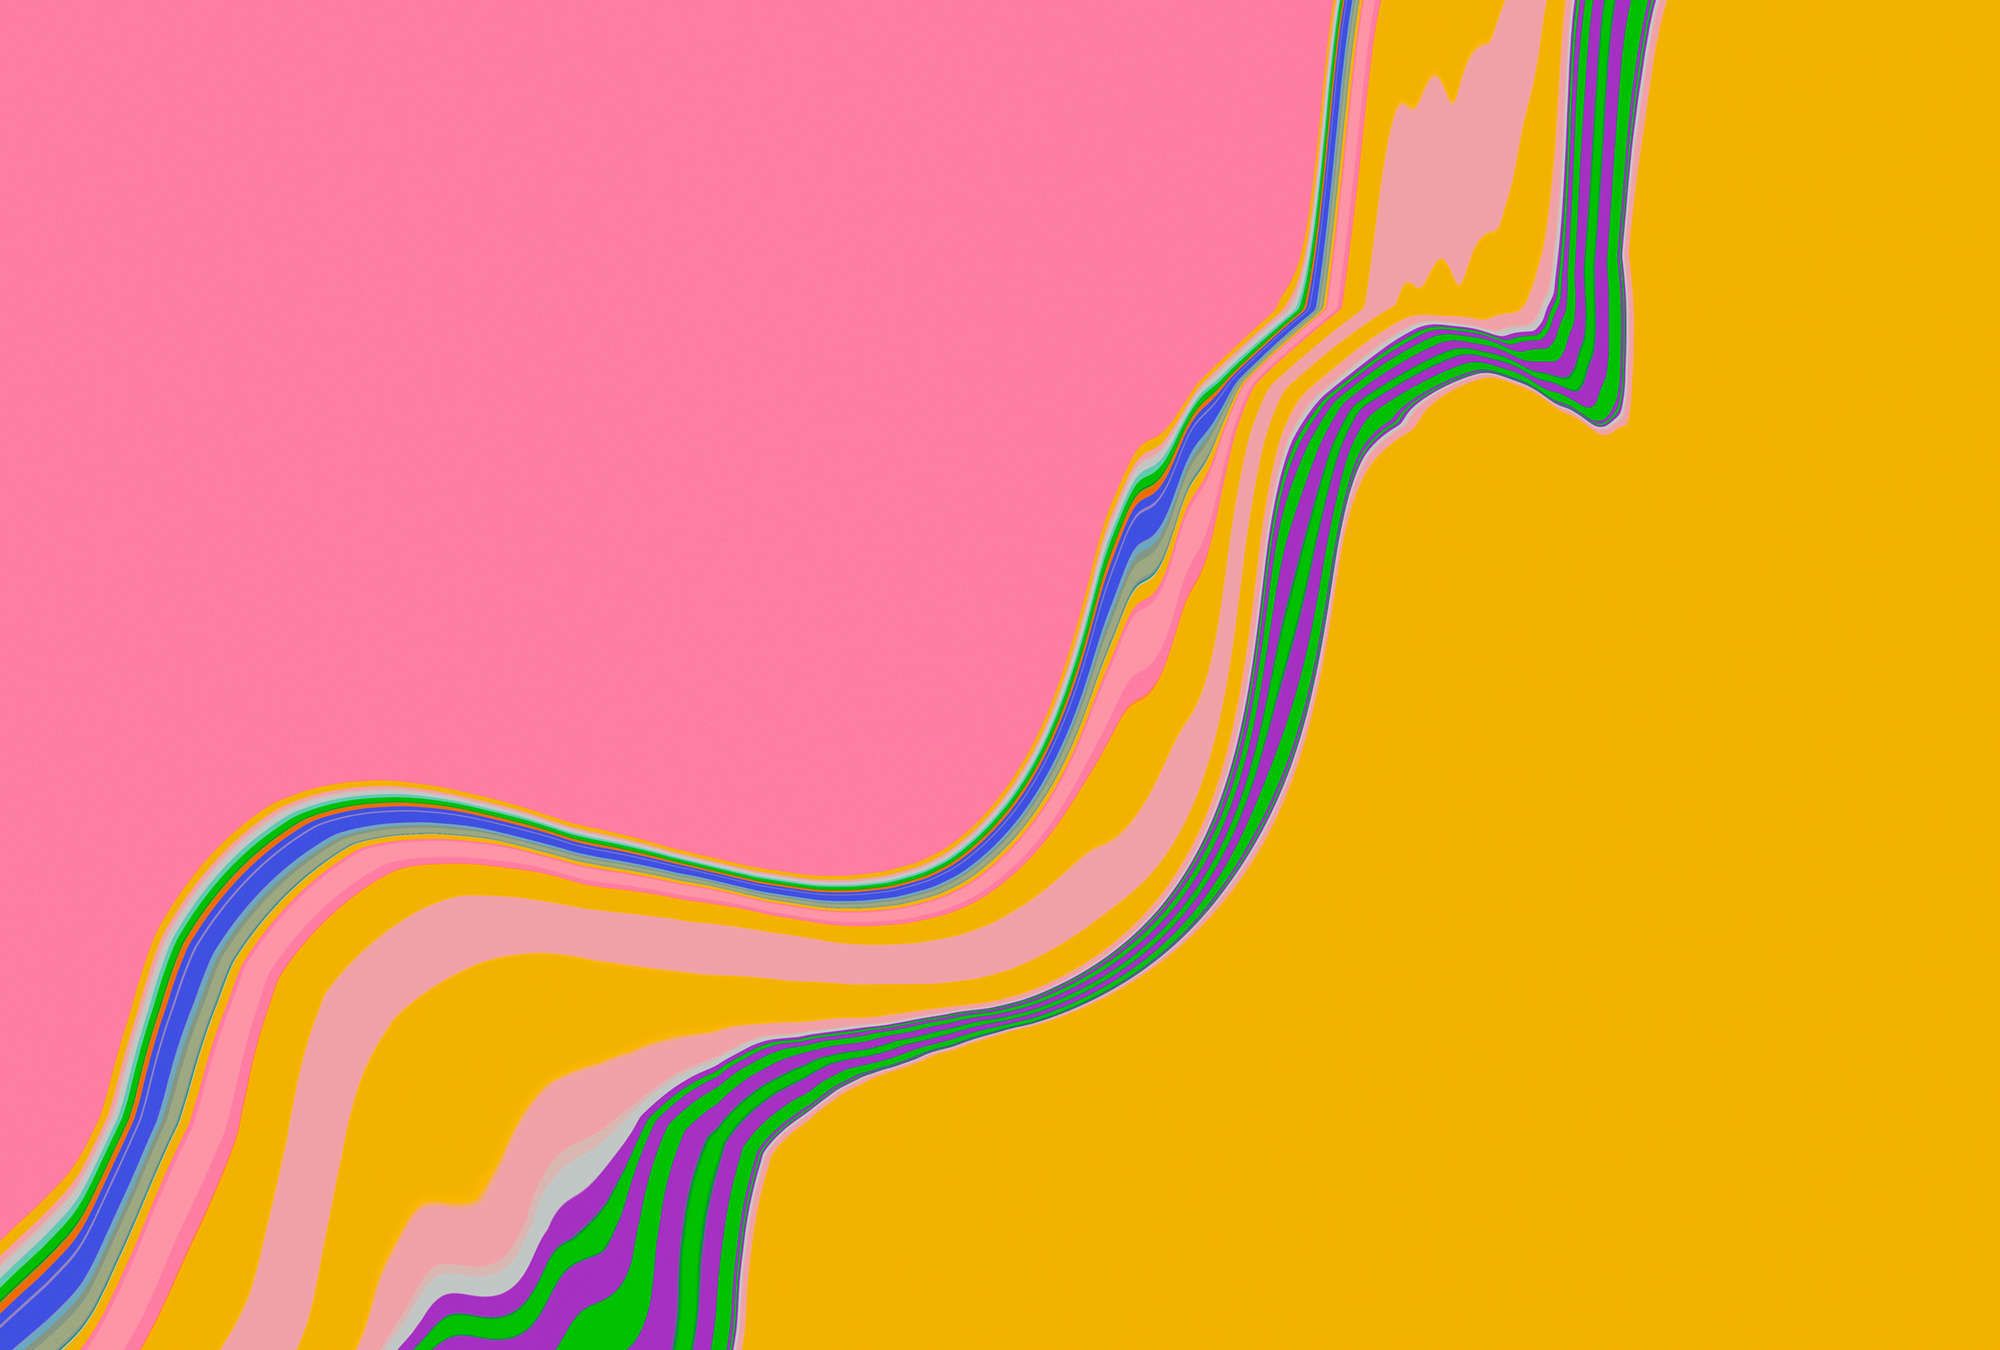             Digital behang »nexus« - Abstract golfontwerp - Roze, oranje | Soepele, licht parelmoerglanzende vliesstof
        